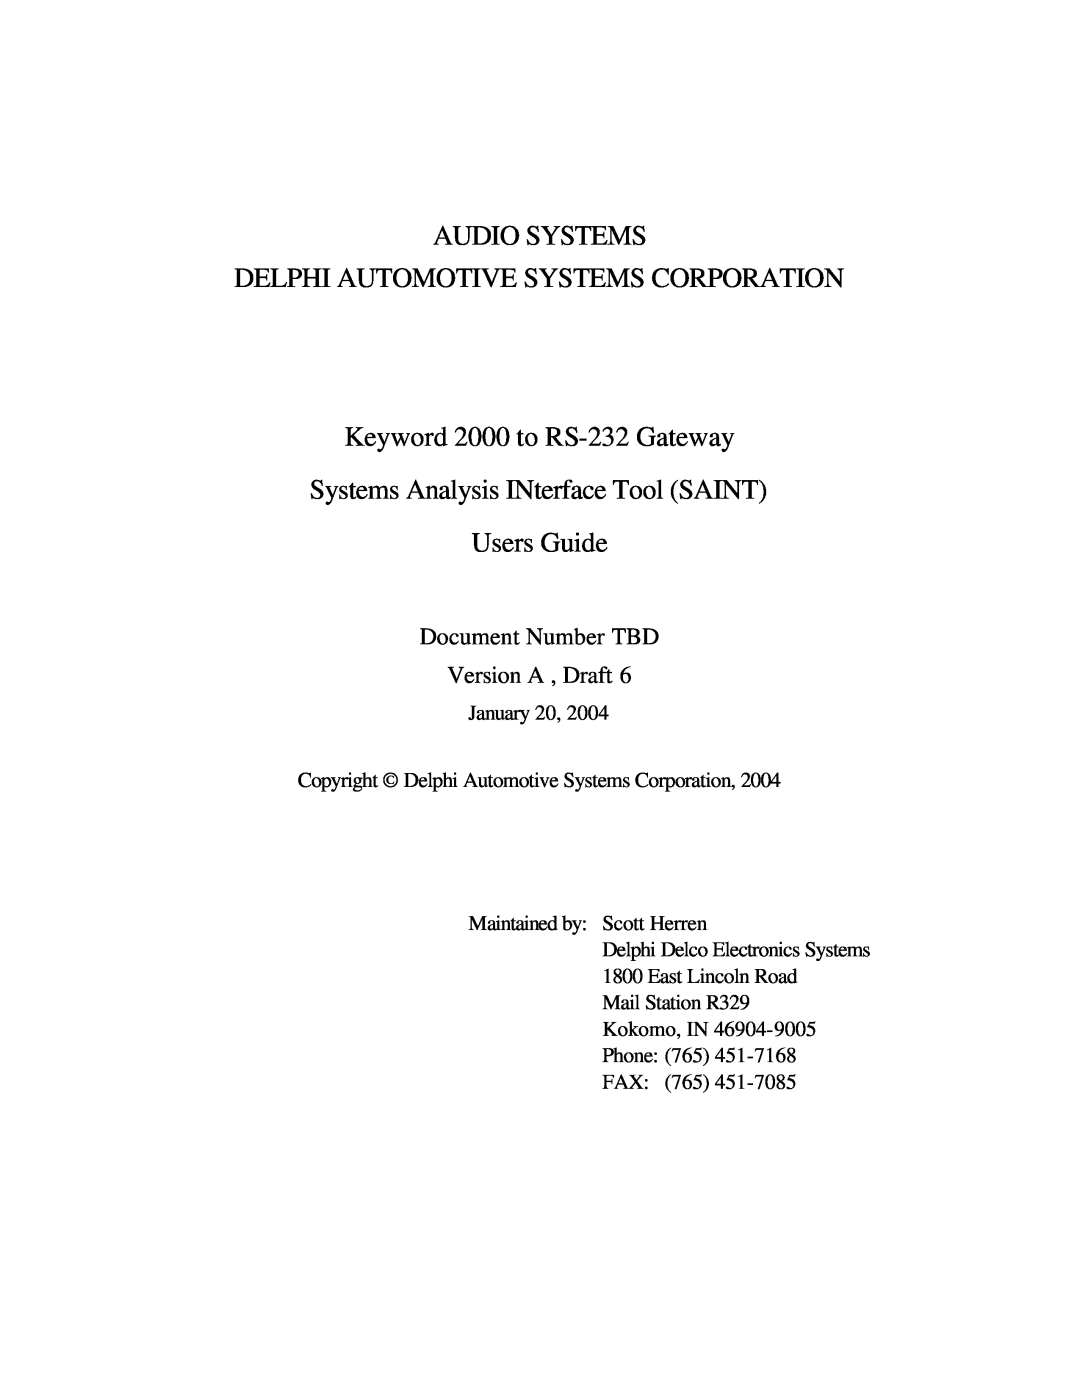 Delphi Gateway Systems Analysis INterface Tool (SAINT) manual January 20, Copyright Delphi Automotive Systems Corporation 